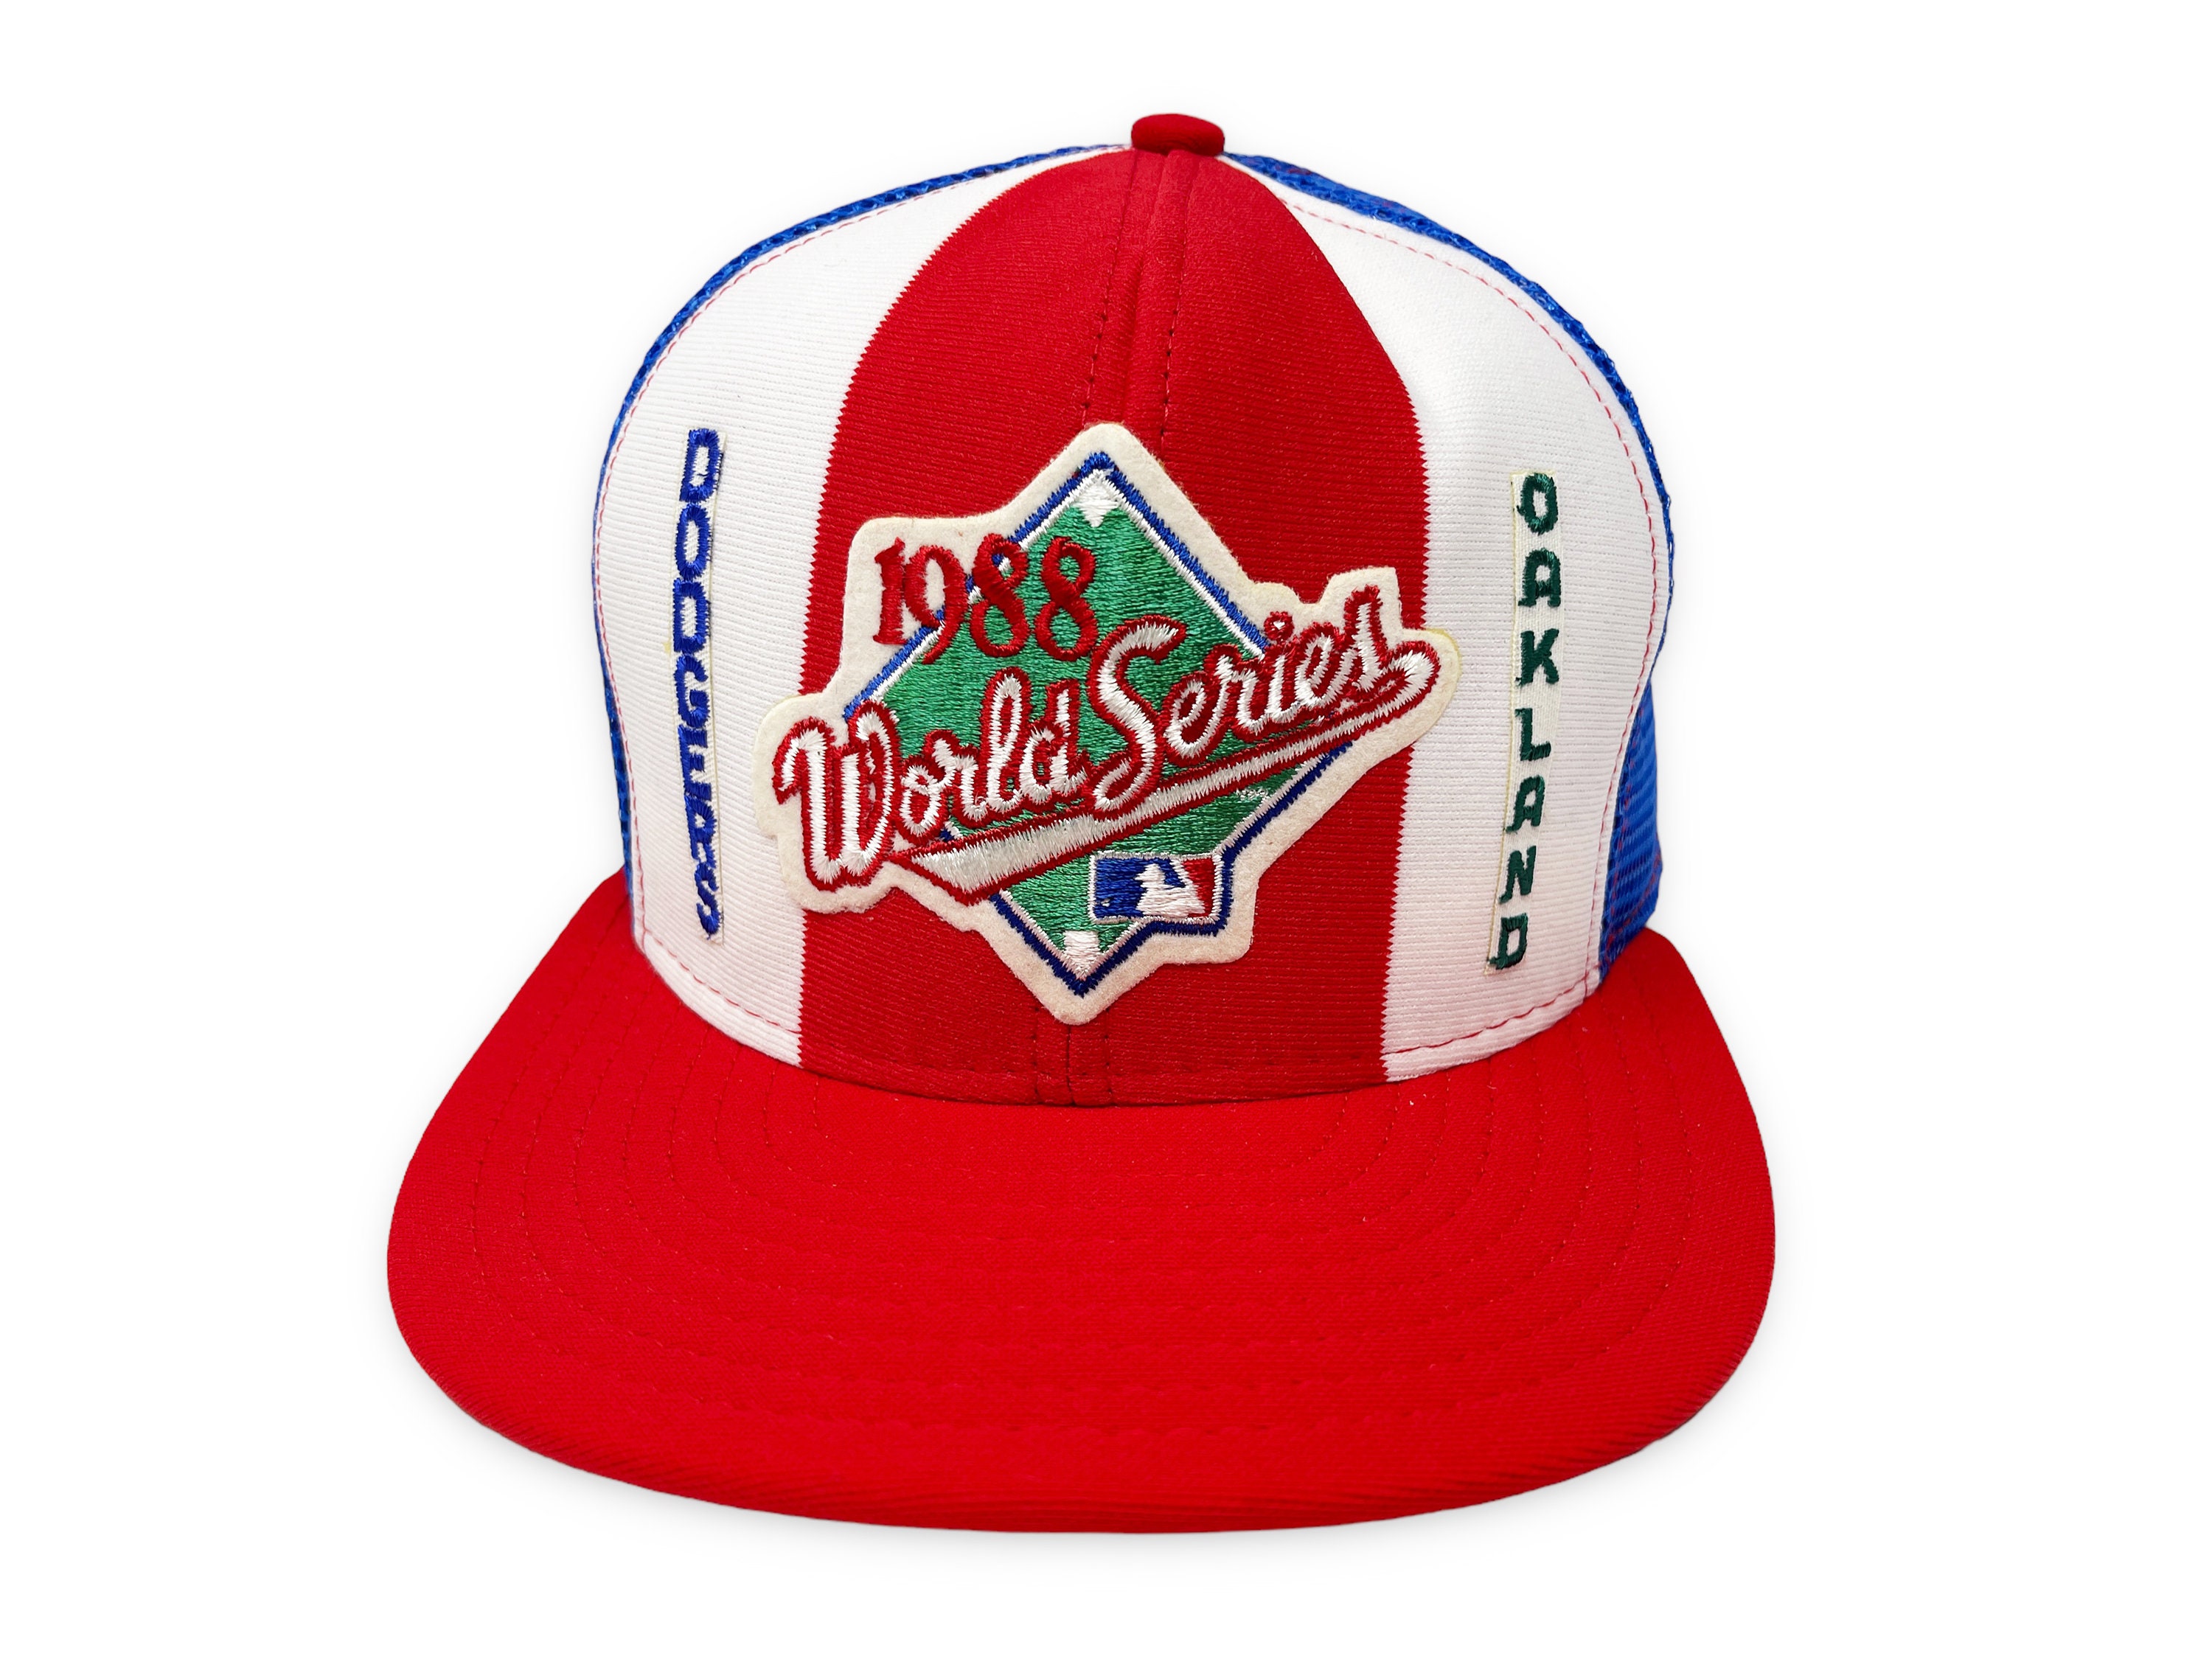 Vintage 1988 World Series Hat Dodgers Athletics Oakland A's La Los Angeles Snapback Trucker Cap H18